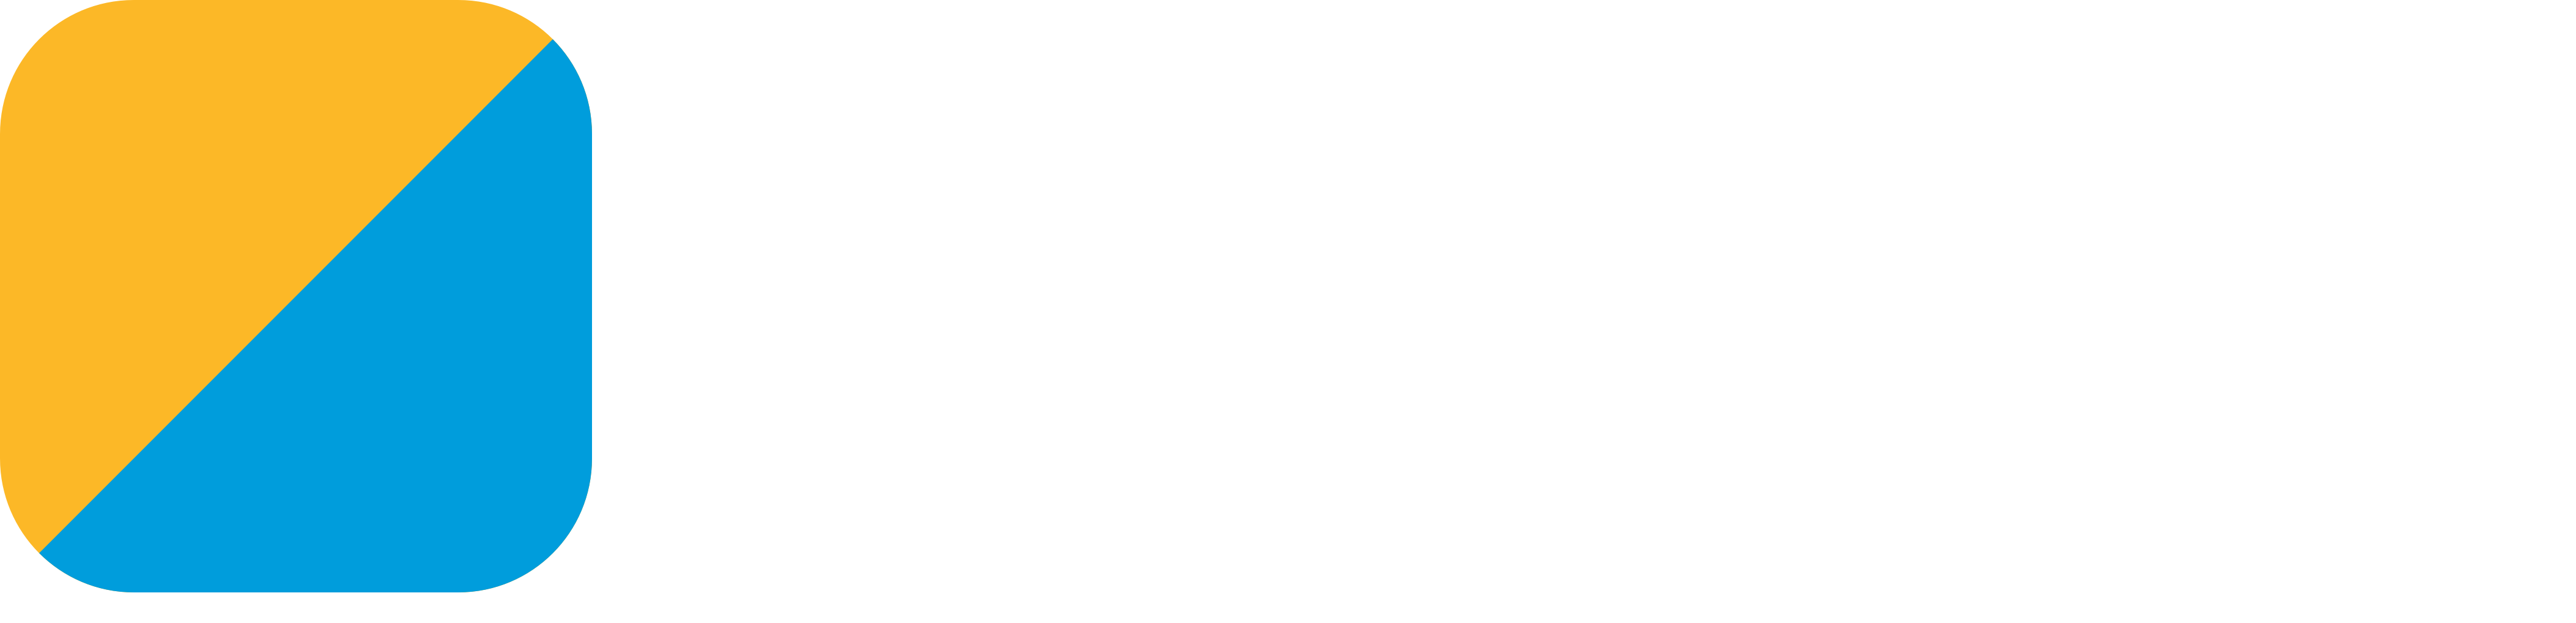 Gryphon logo